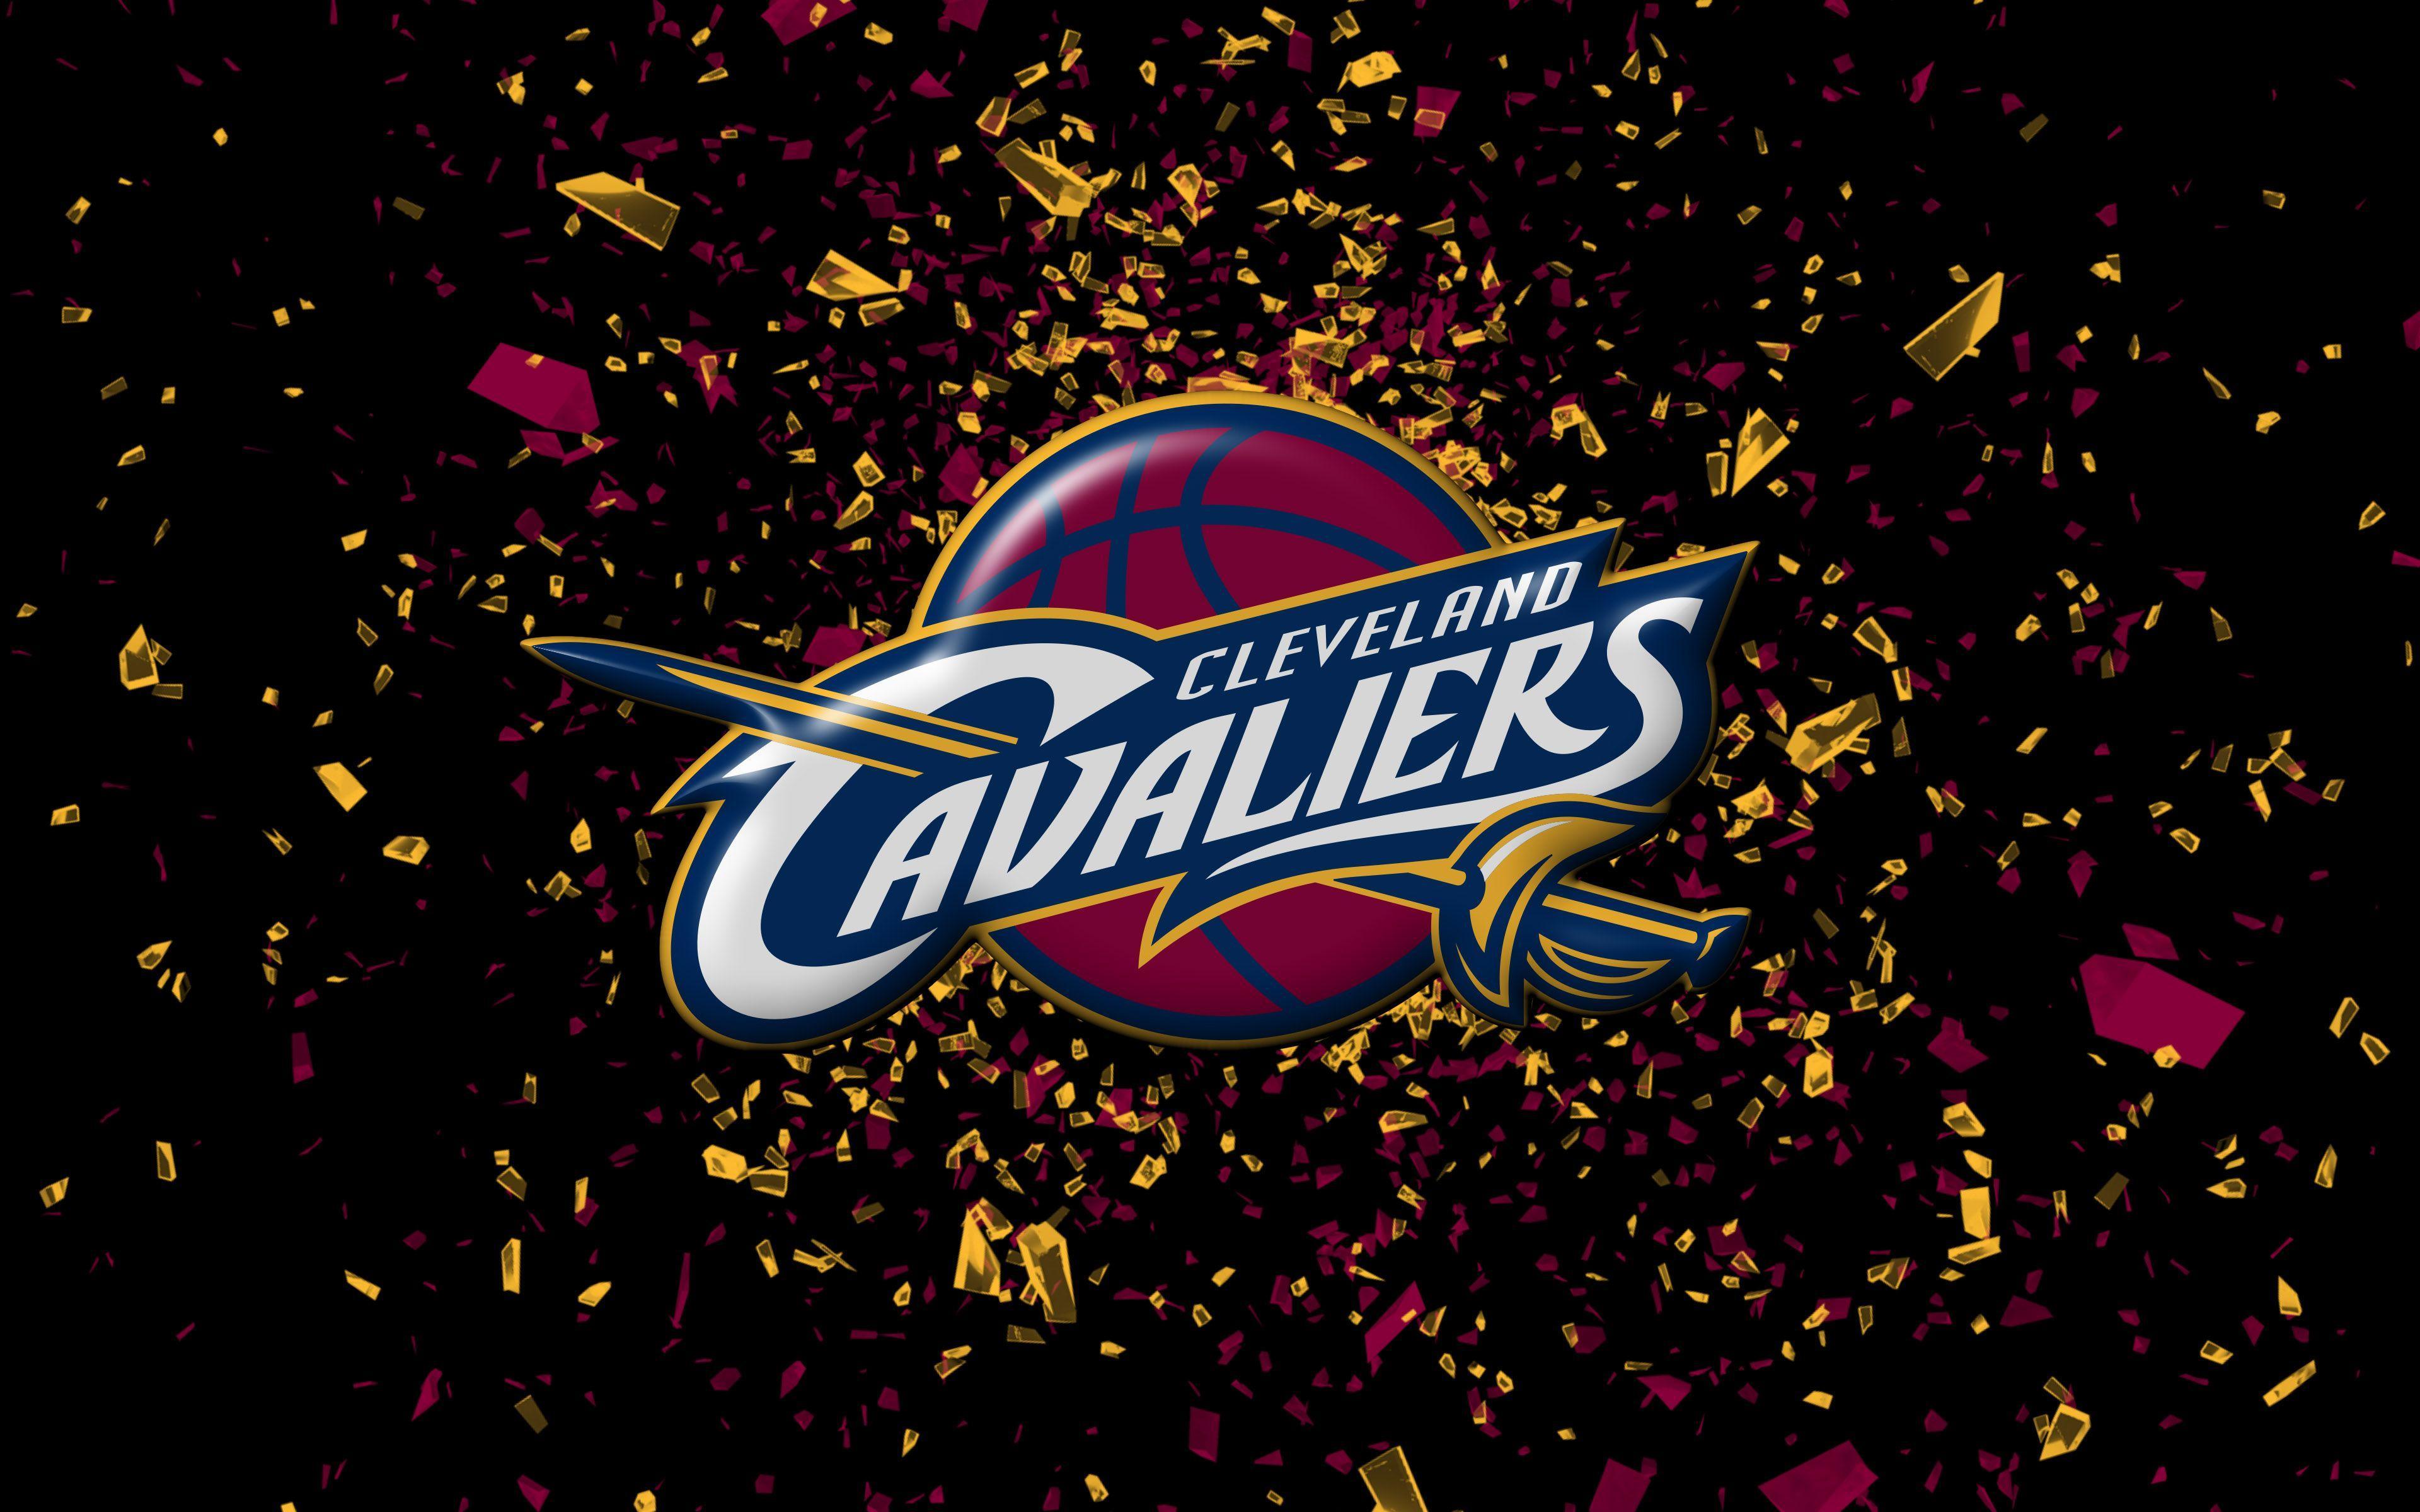 Cleveland Cavaliers 2014 Logo Wallpaper Wide or HD. Digital Art